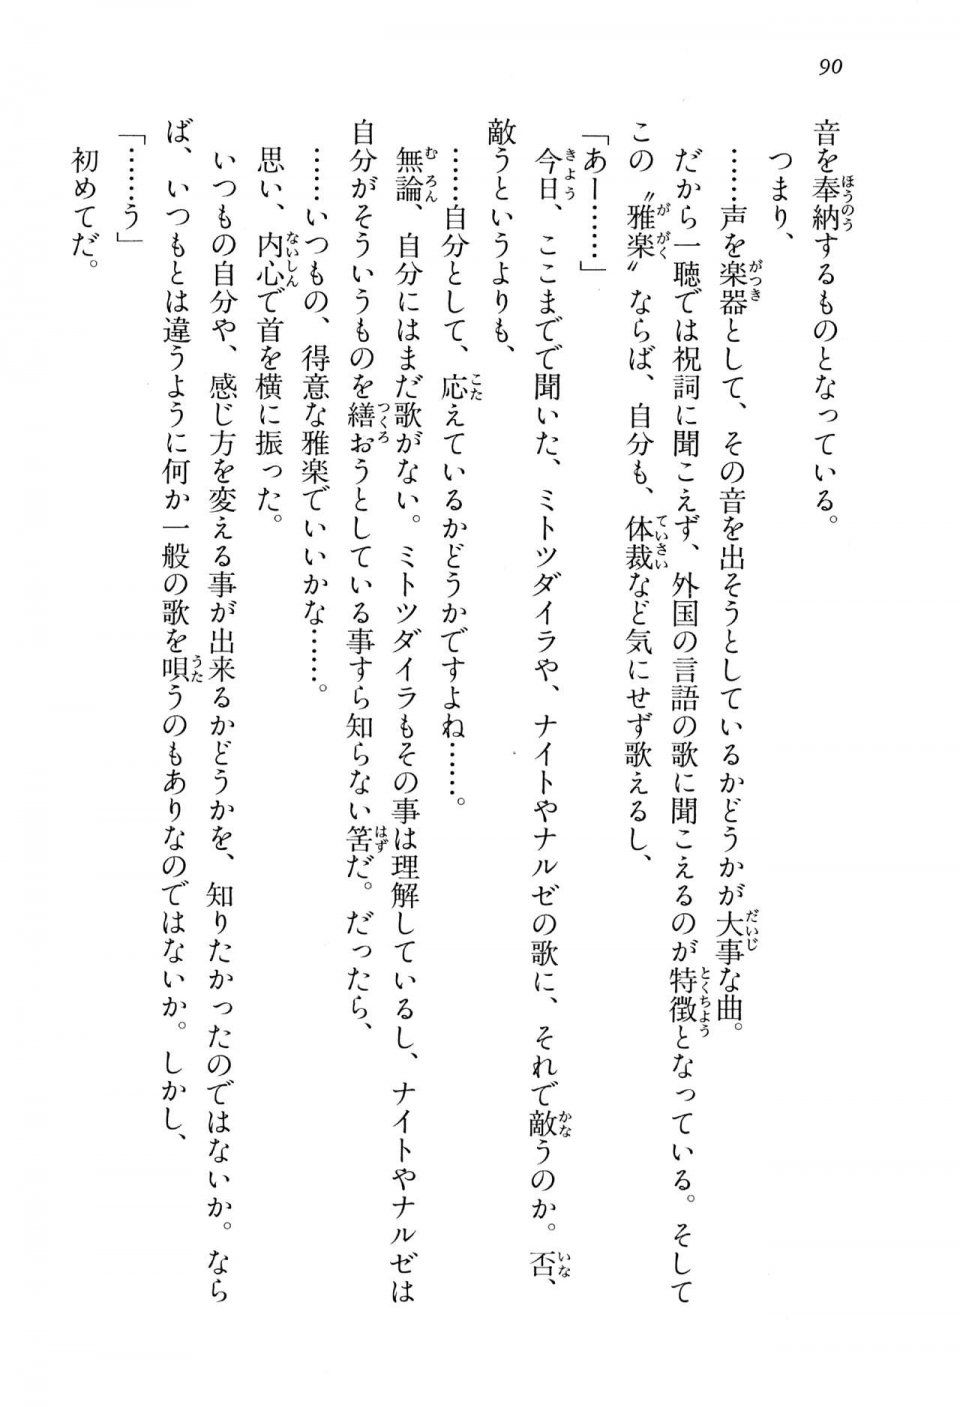 Kyoukai Senjou no Horizon BD Special Mininovel Vol 3(2A) - Photo #94